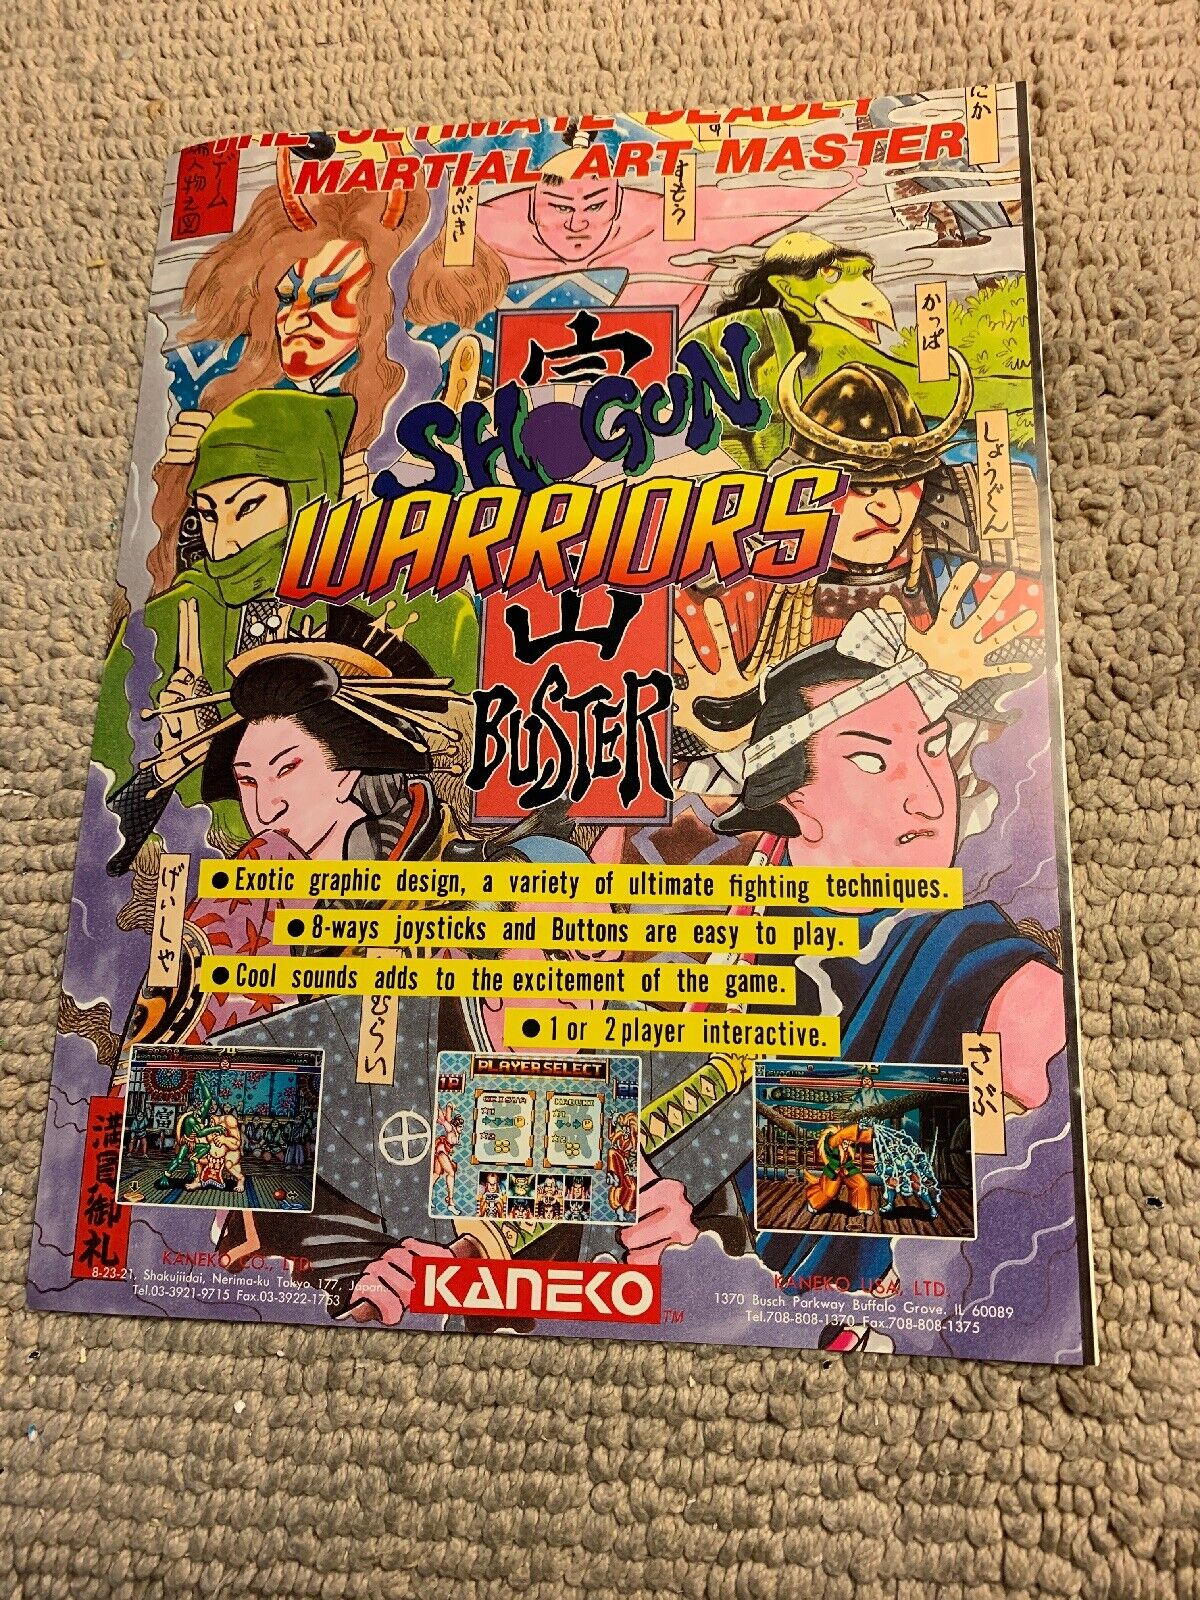 oRIGINAL 1993 AD 11-8 1/4” Shogun Warrior buster Kaneko  Arcade Video GAME FLYER